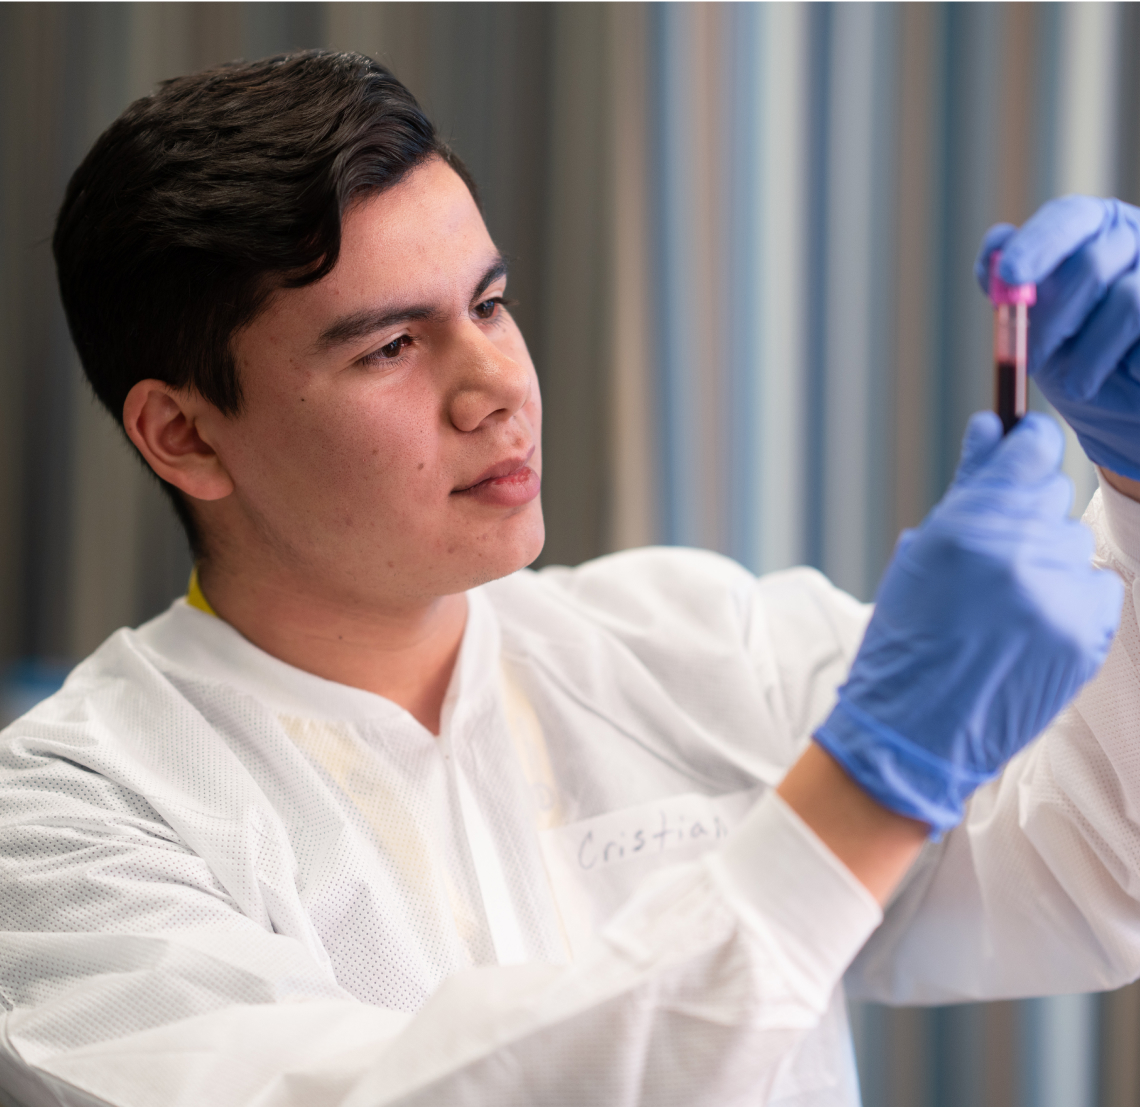 Carrington College Phlebotomy Technician student observing blood specimen